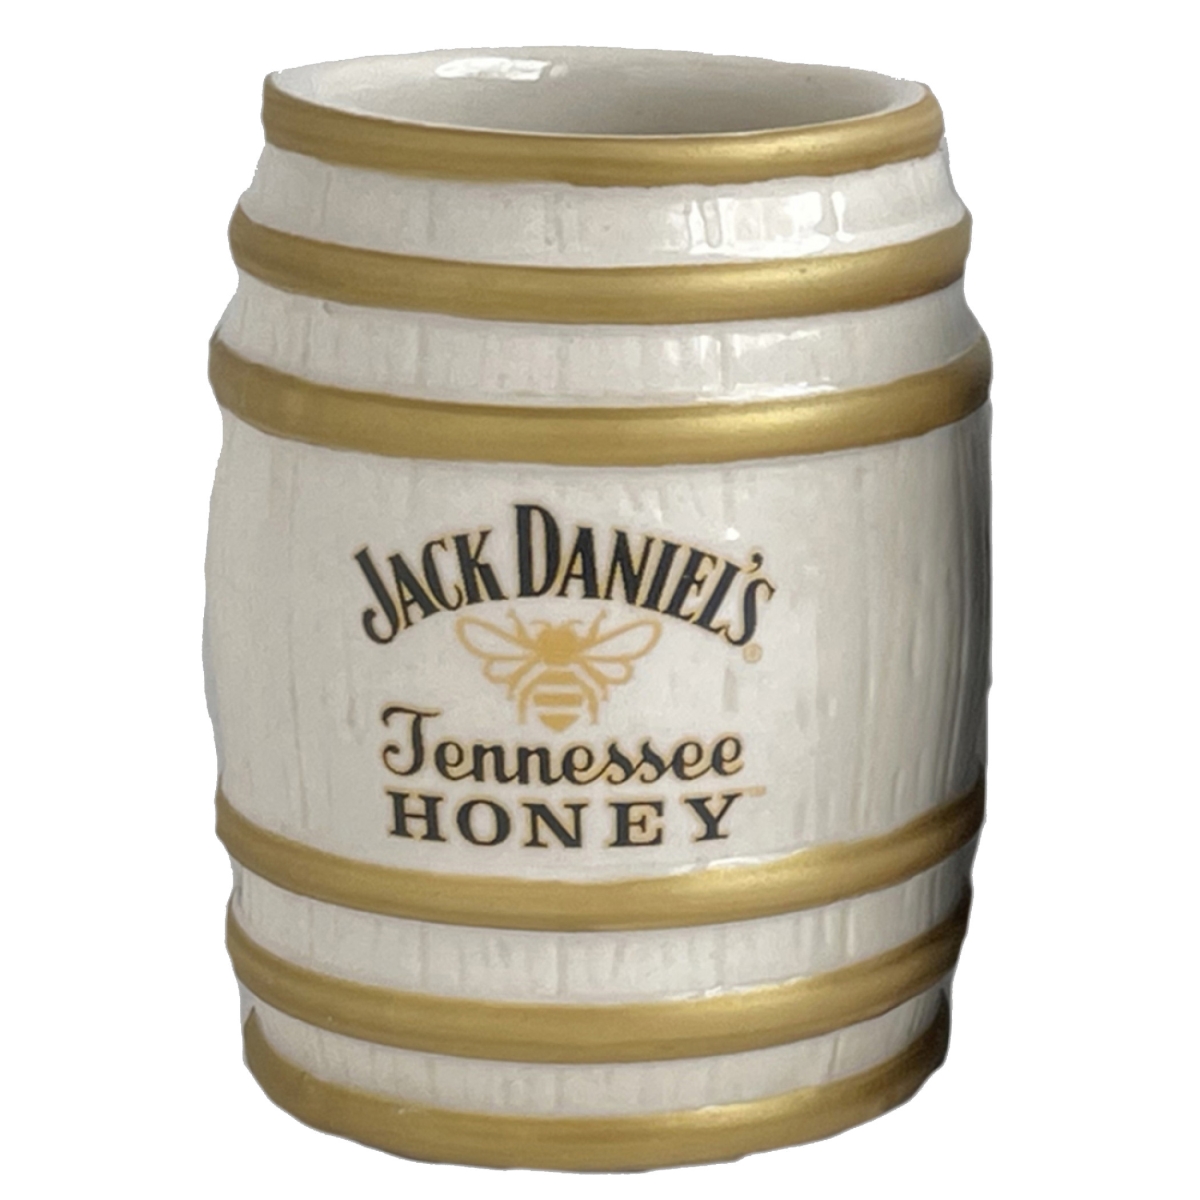 Picture of Jack Daniels 844682 Jack Daniels Tennessee Honey Barrel Ceramic Shot Glass